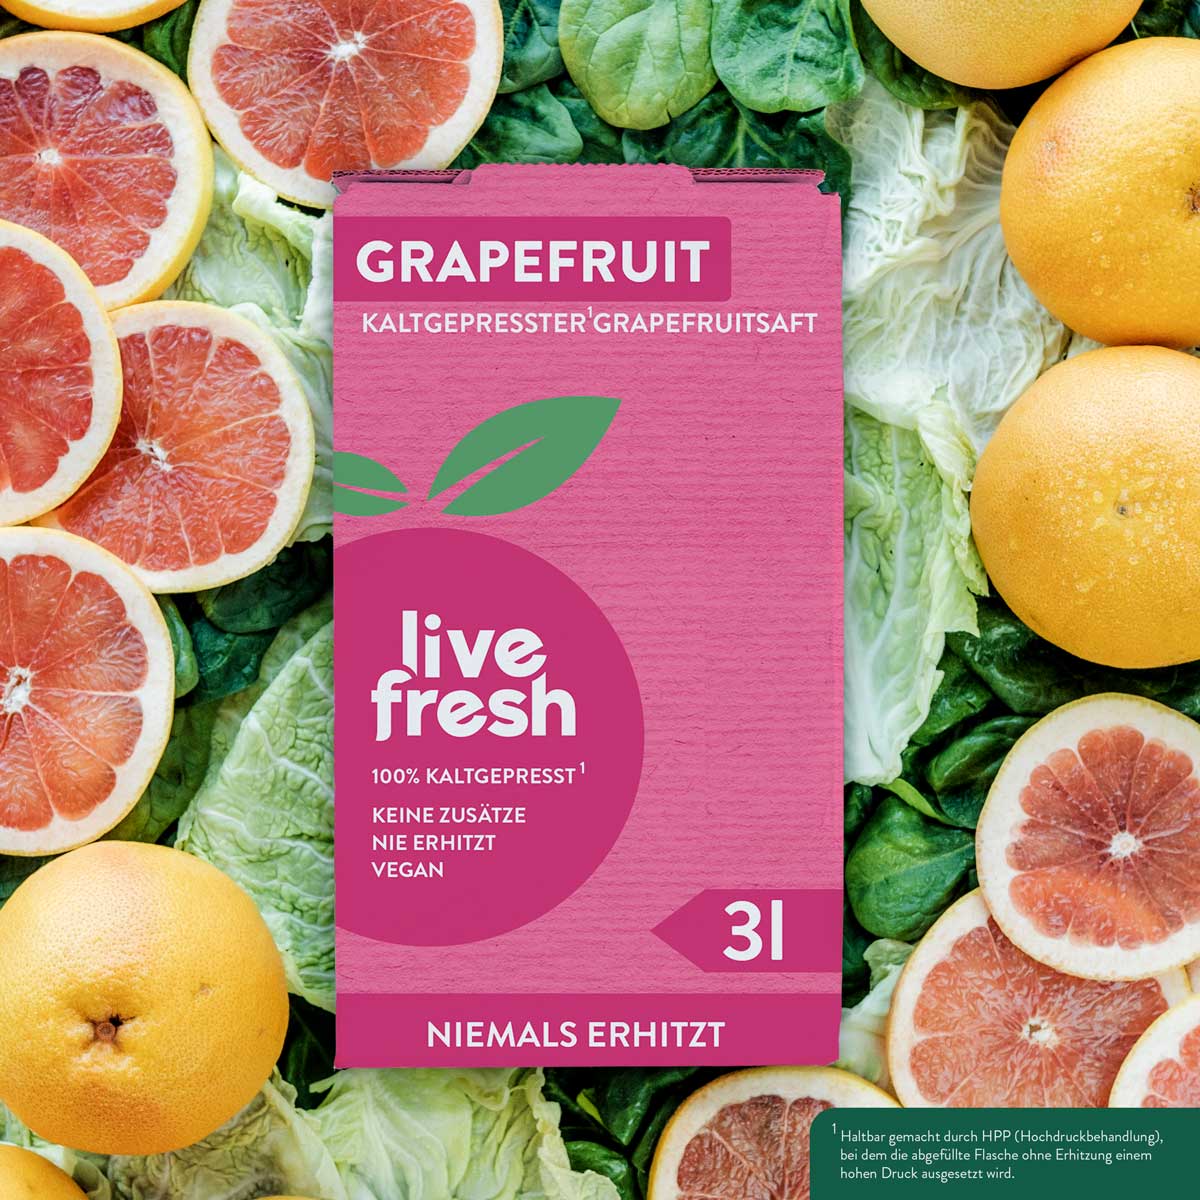 3 litre juice box - Cold pressed¹ grapefruit